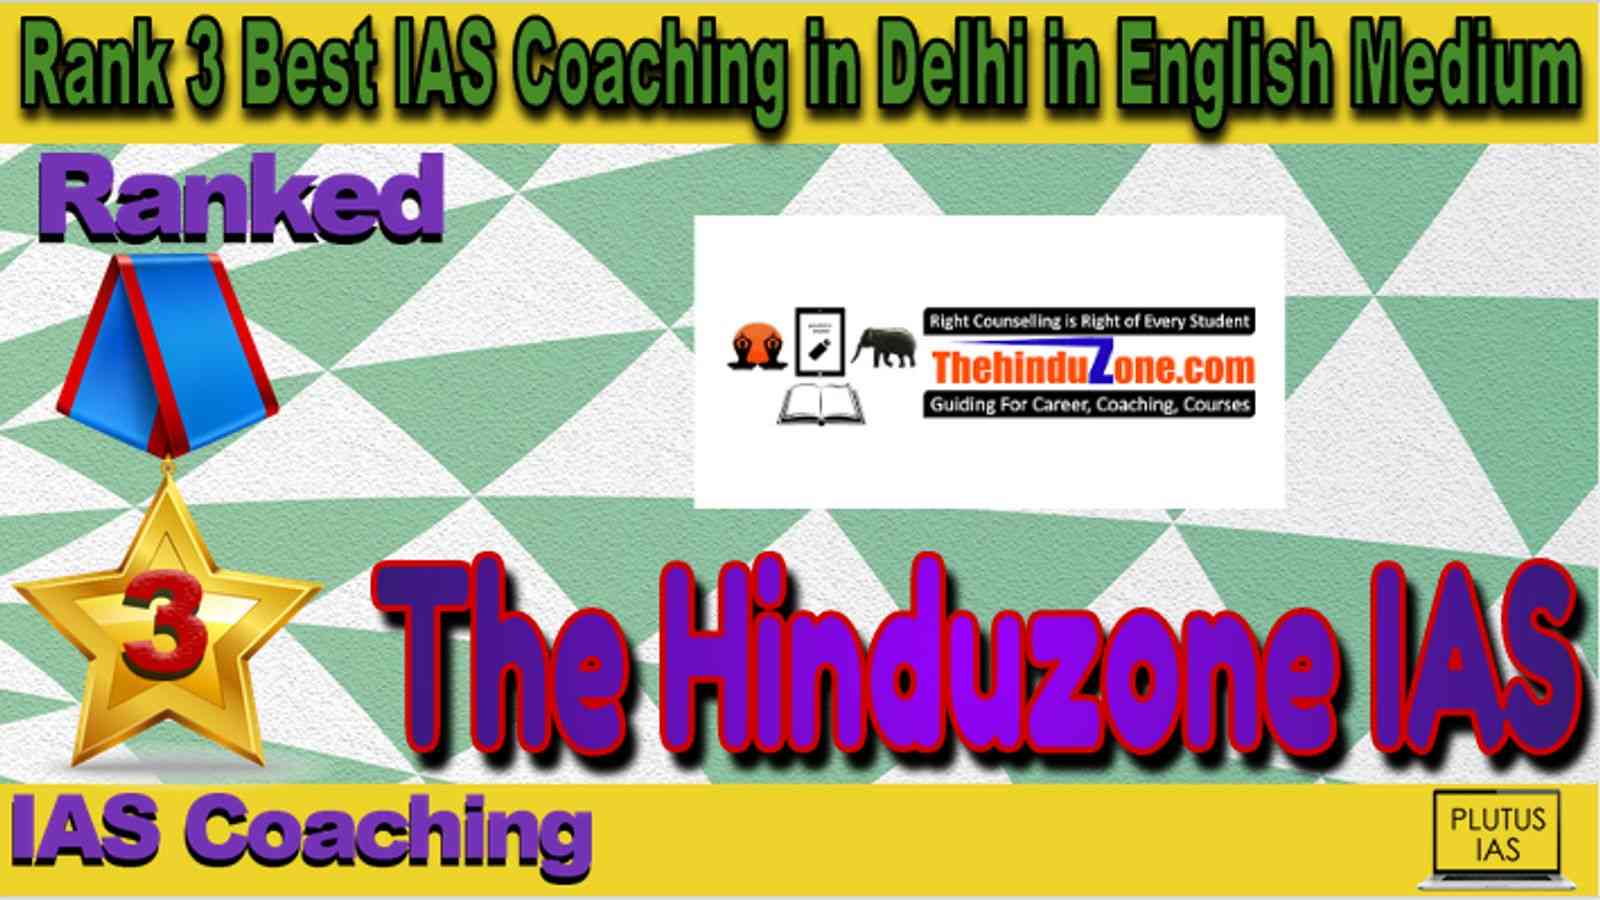 Rank 3 Best IAS Coaching in Delhi in English Medium